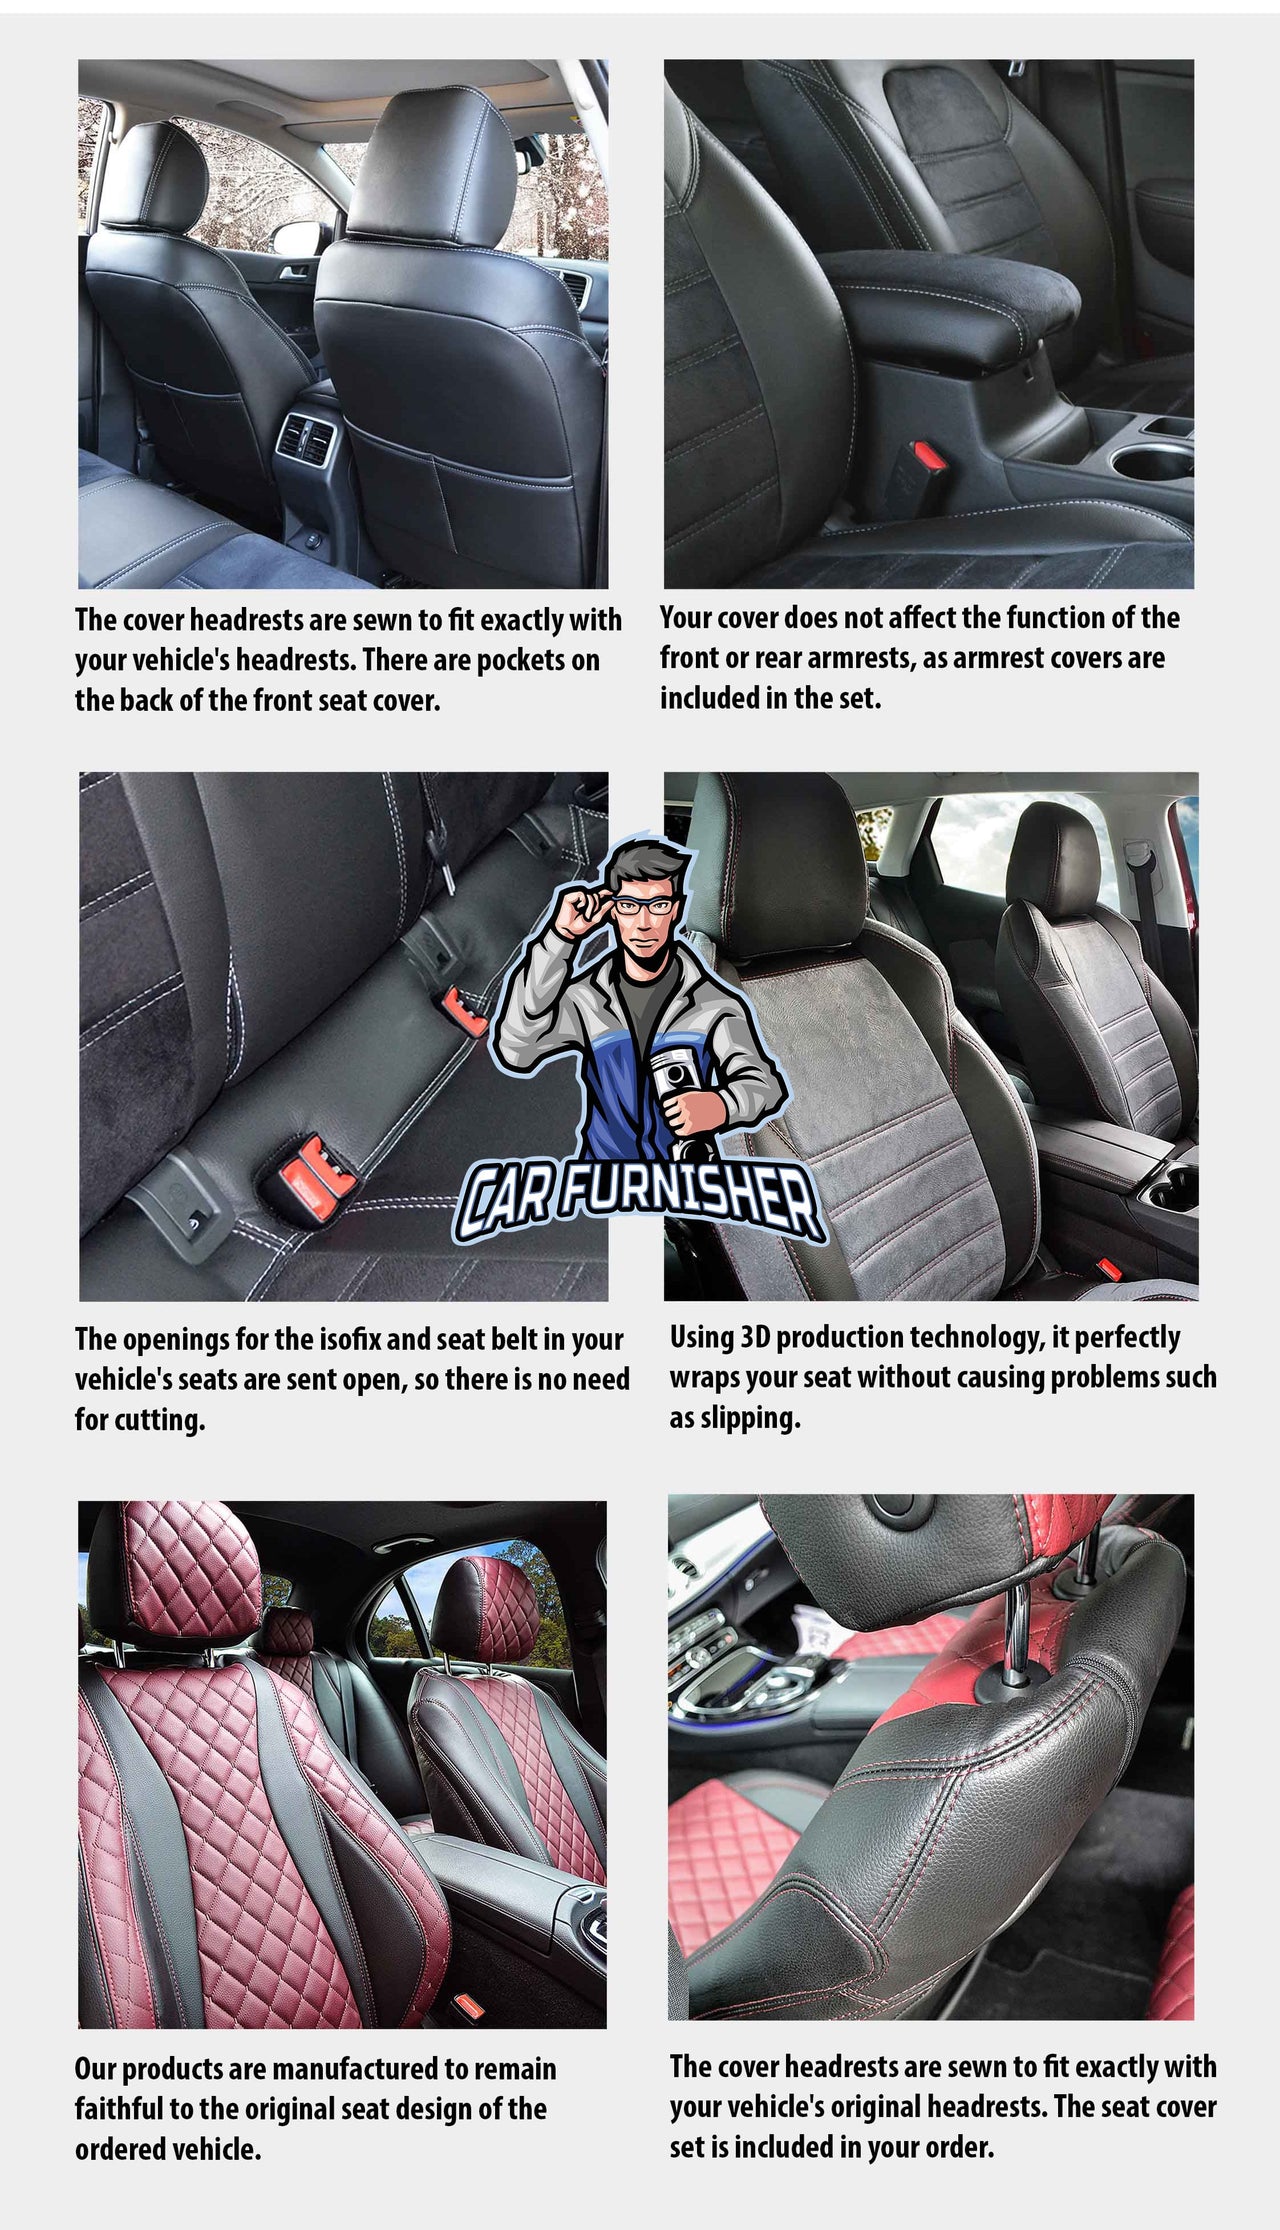 Fiat Stilo Seat Covers Amsterdam Leather Design Dark Gray Leather